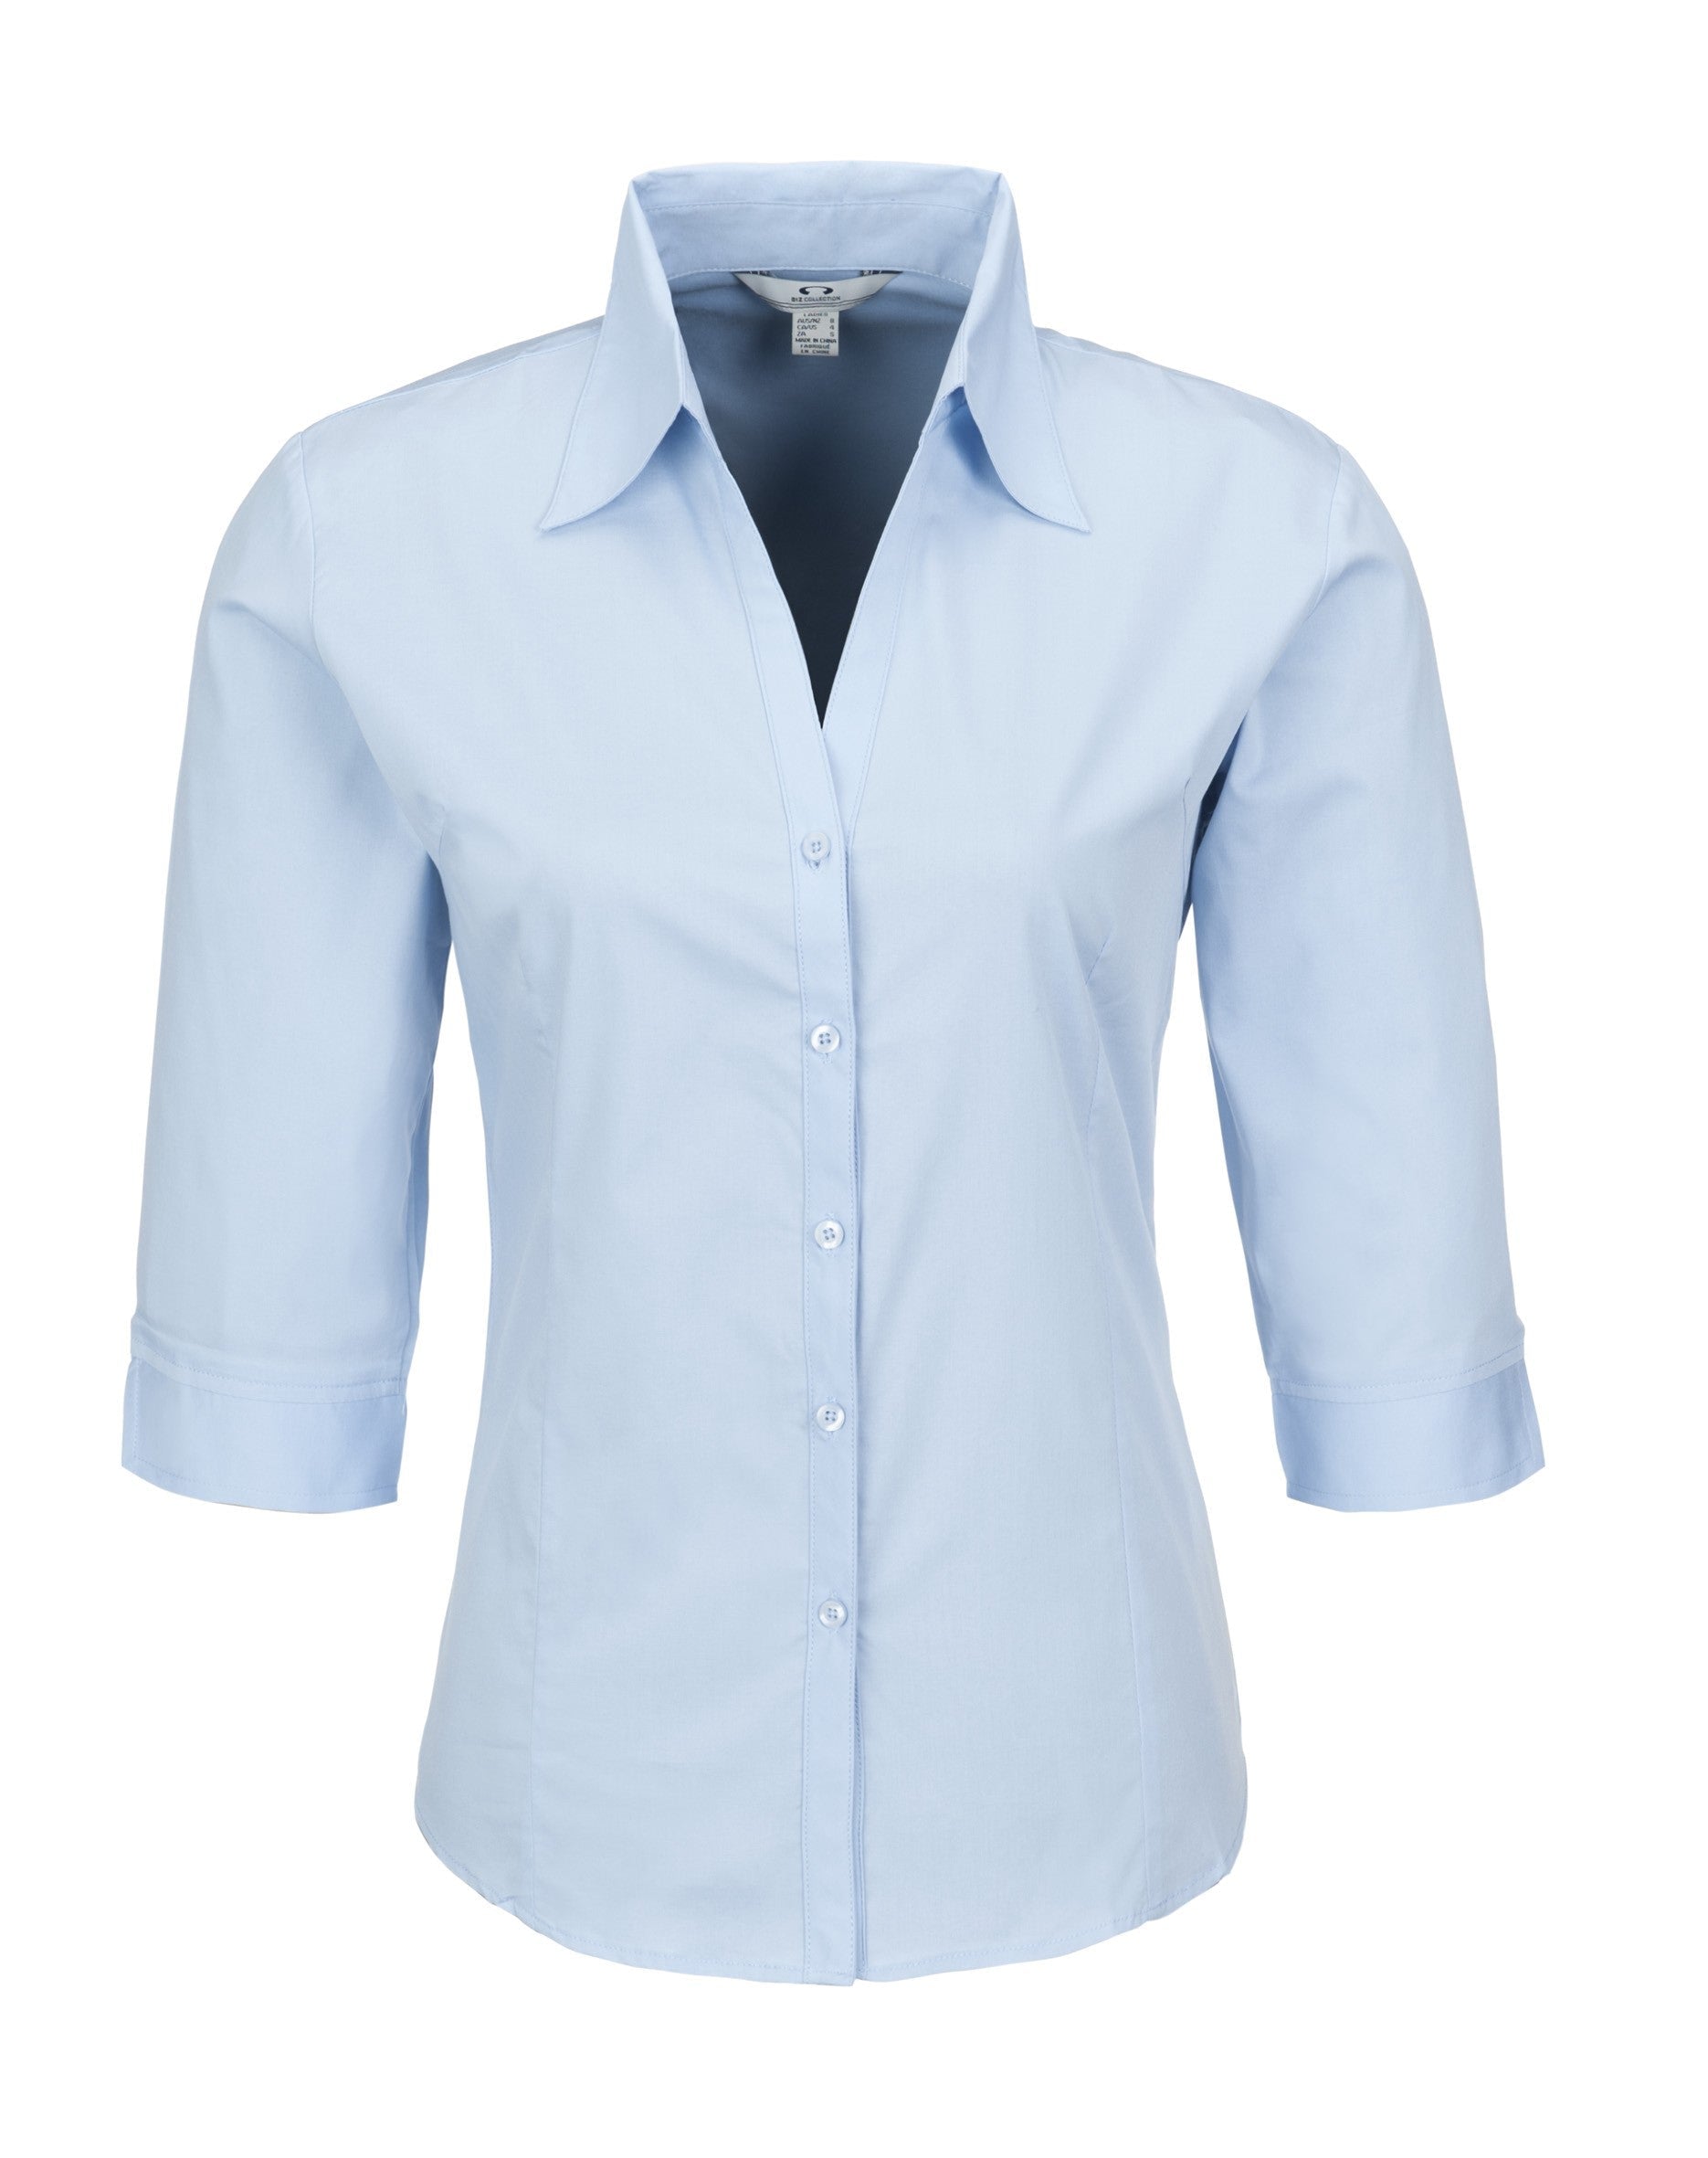 Ladies 3/4 Sleeve Metro Shirt - Black Only-2XL-Light Blue-LB